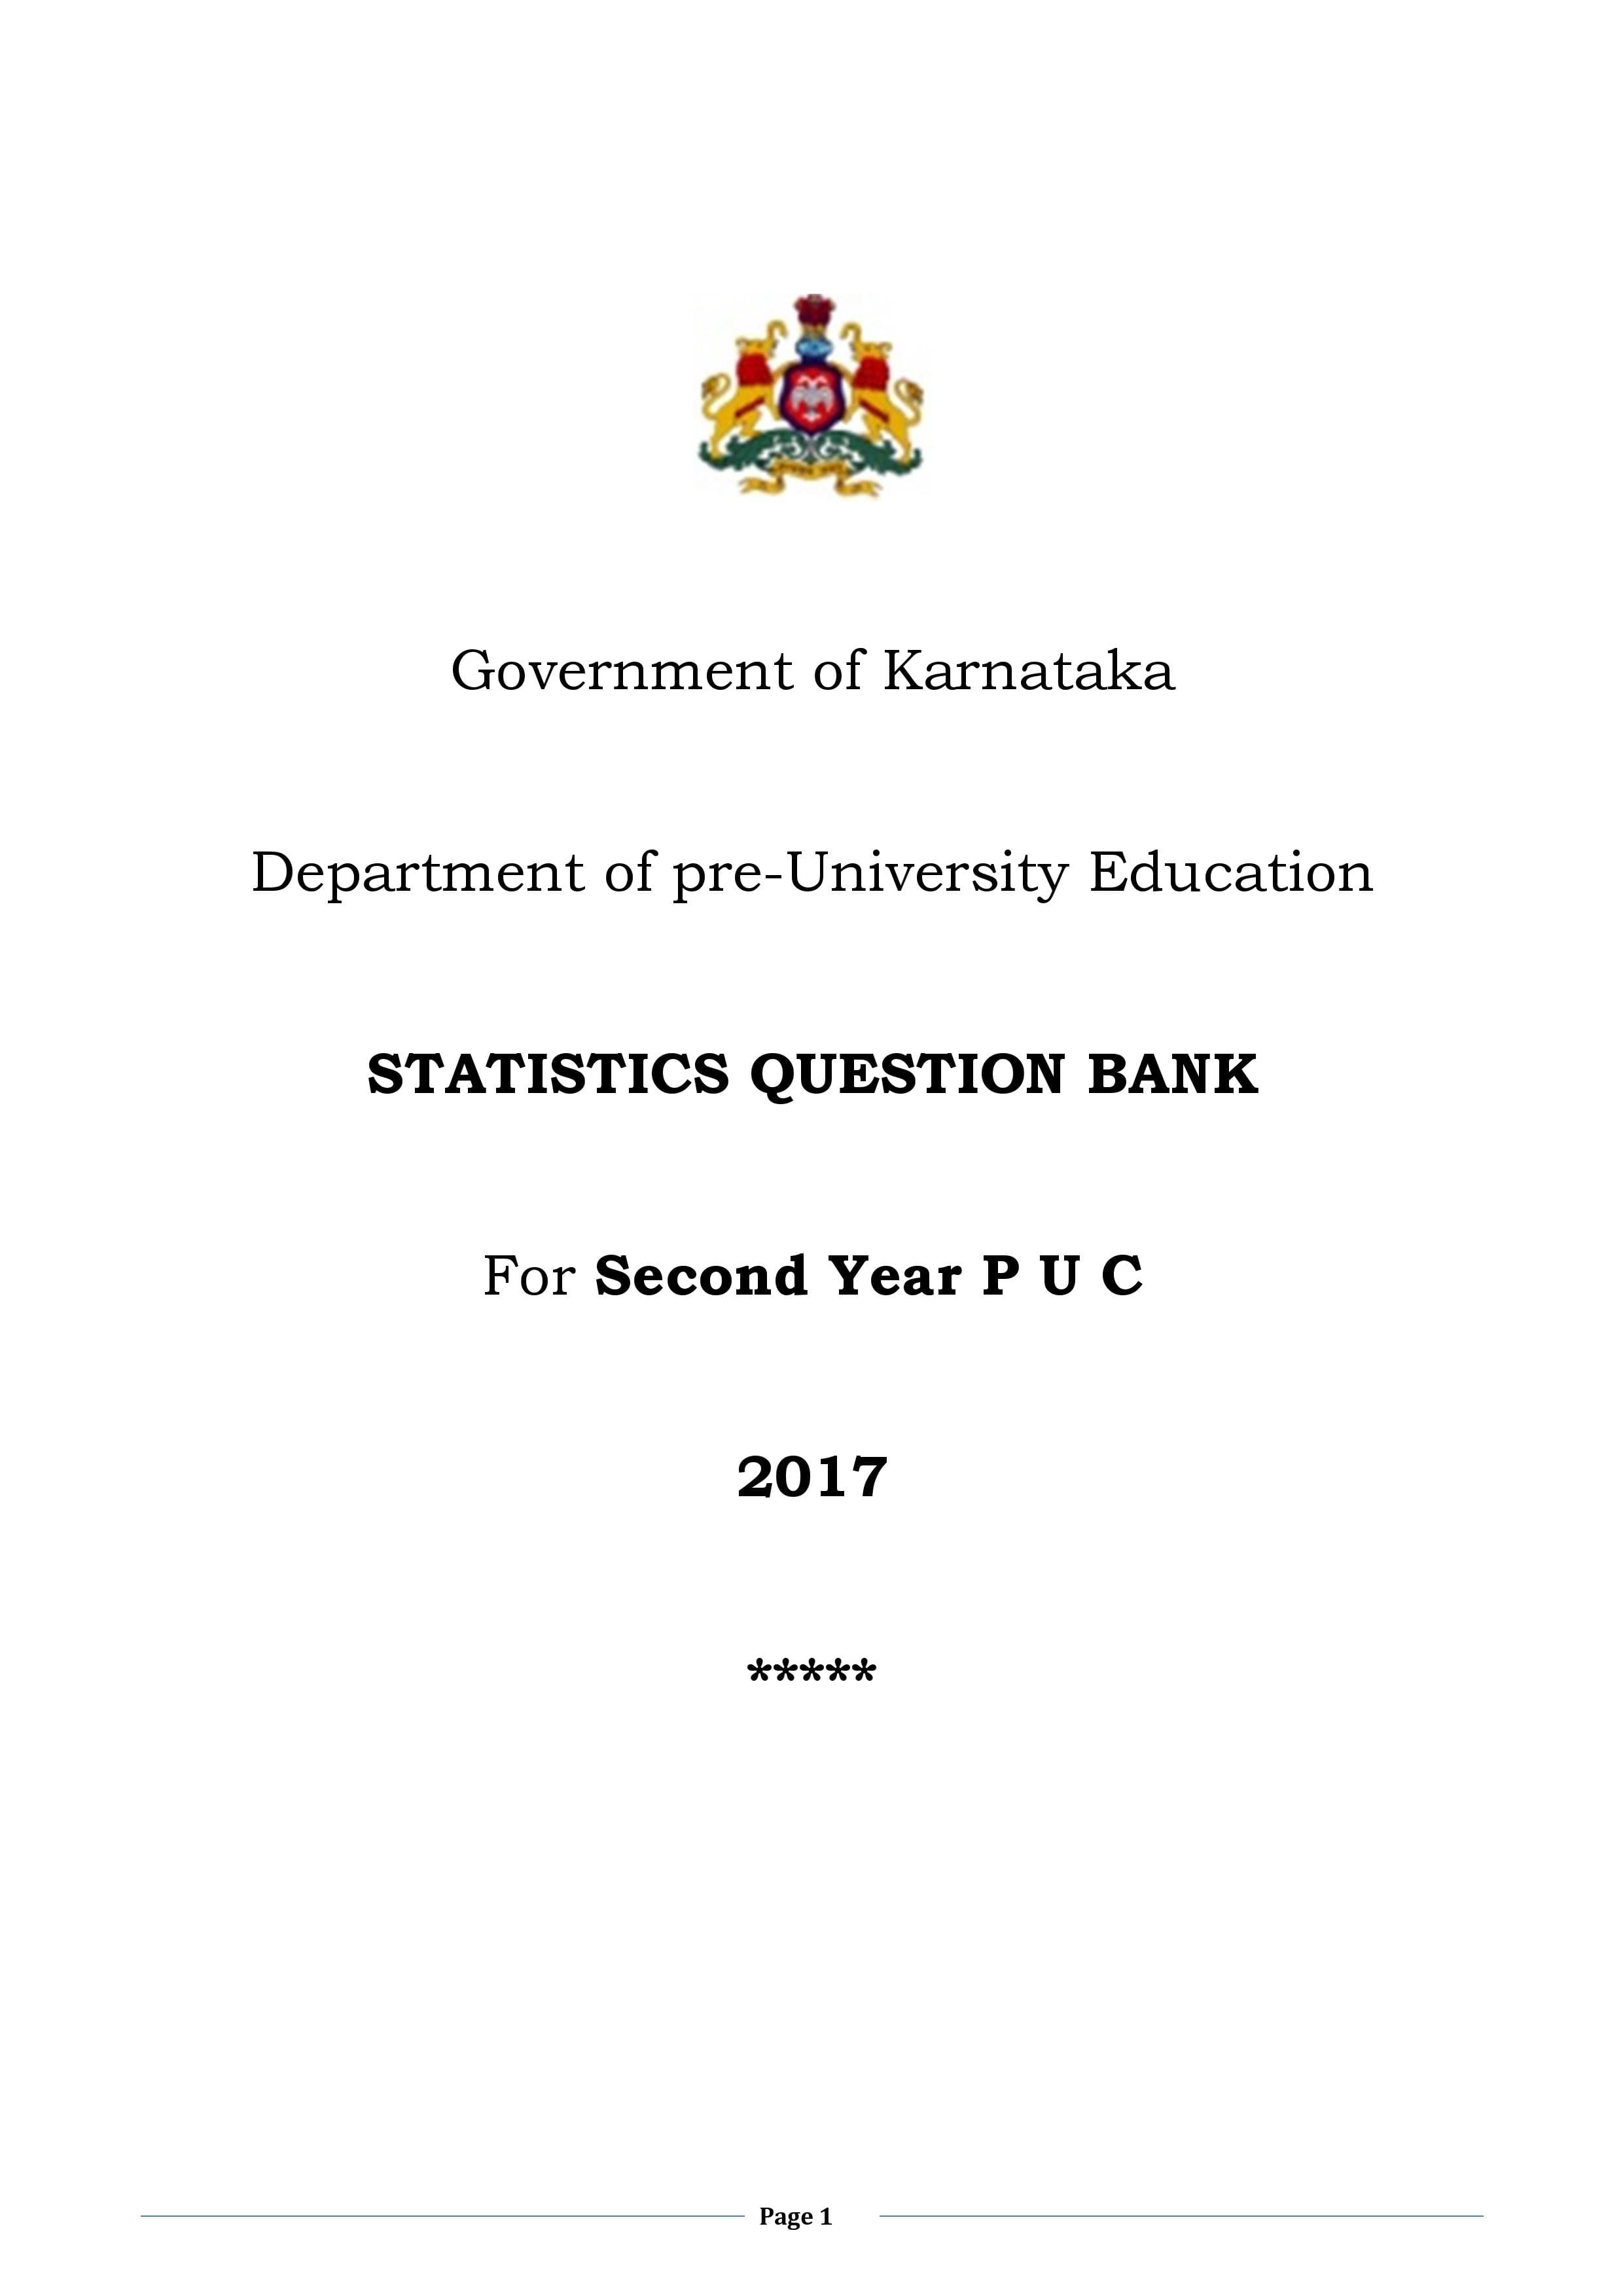 Karnataka 2nd PUC Question Bank for Statistics 2017-18 - Page 1